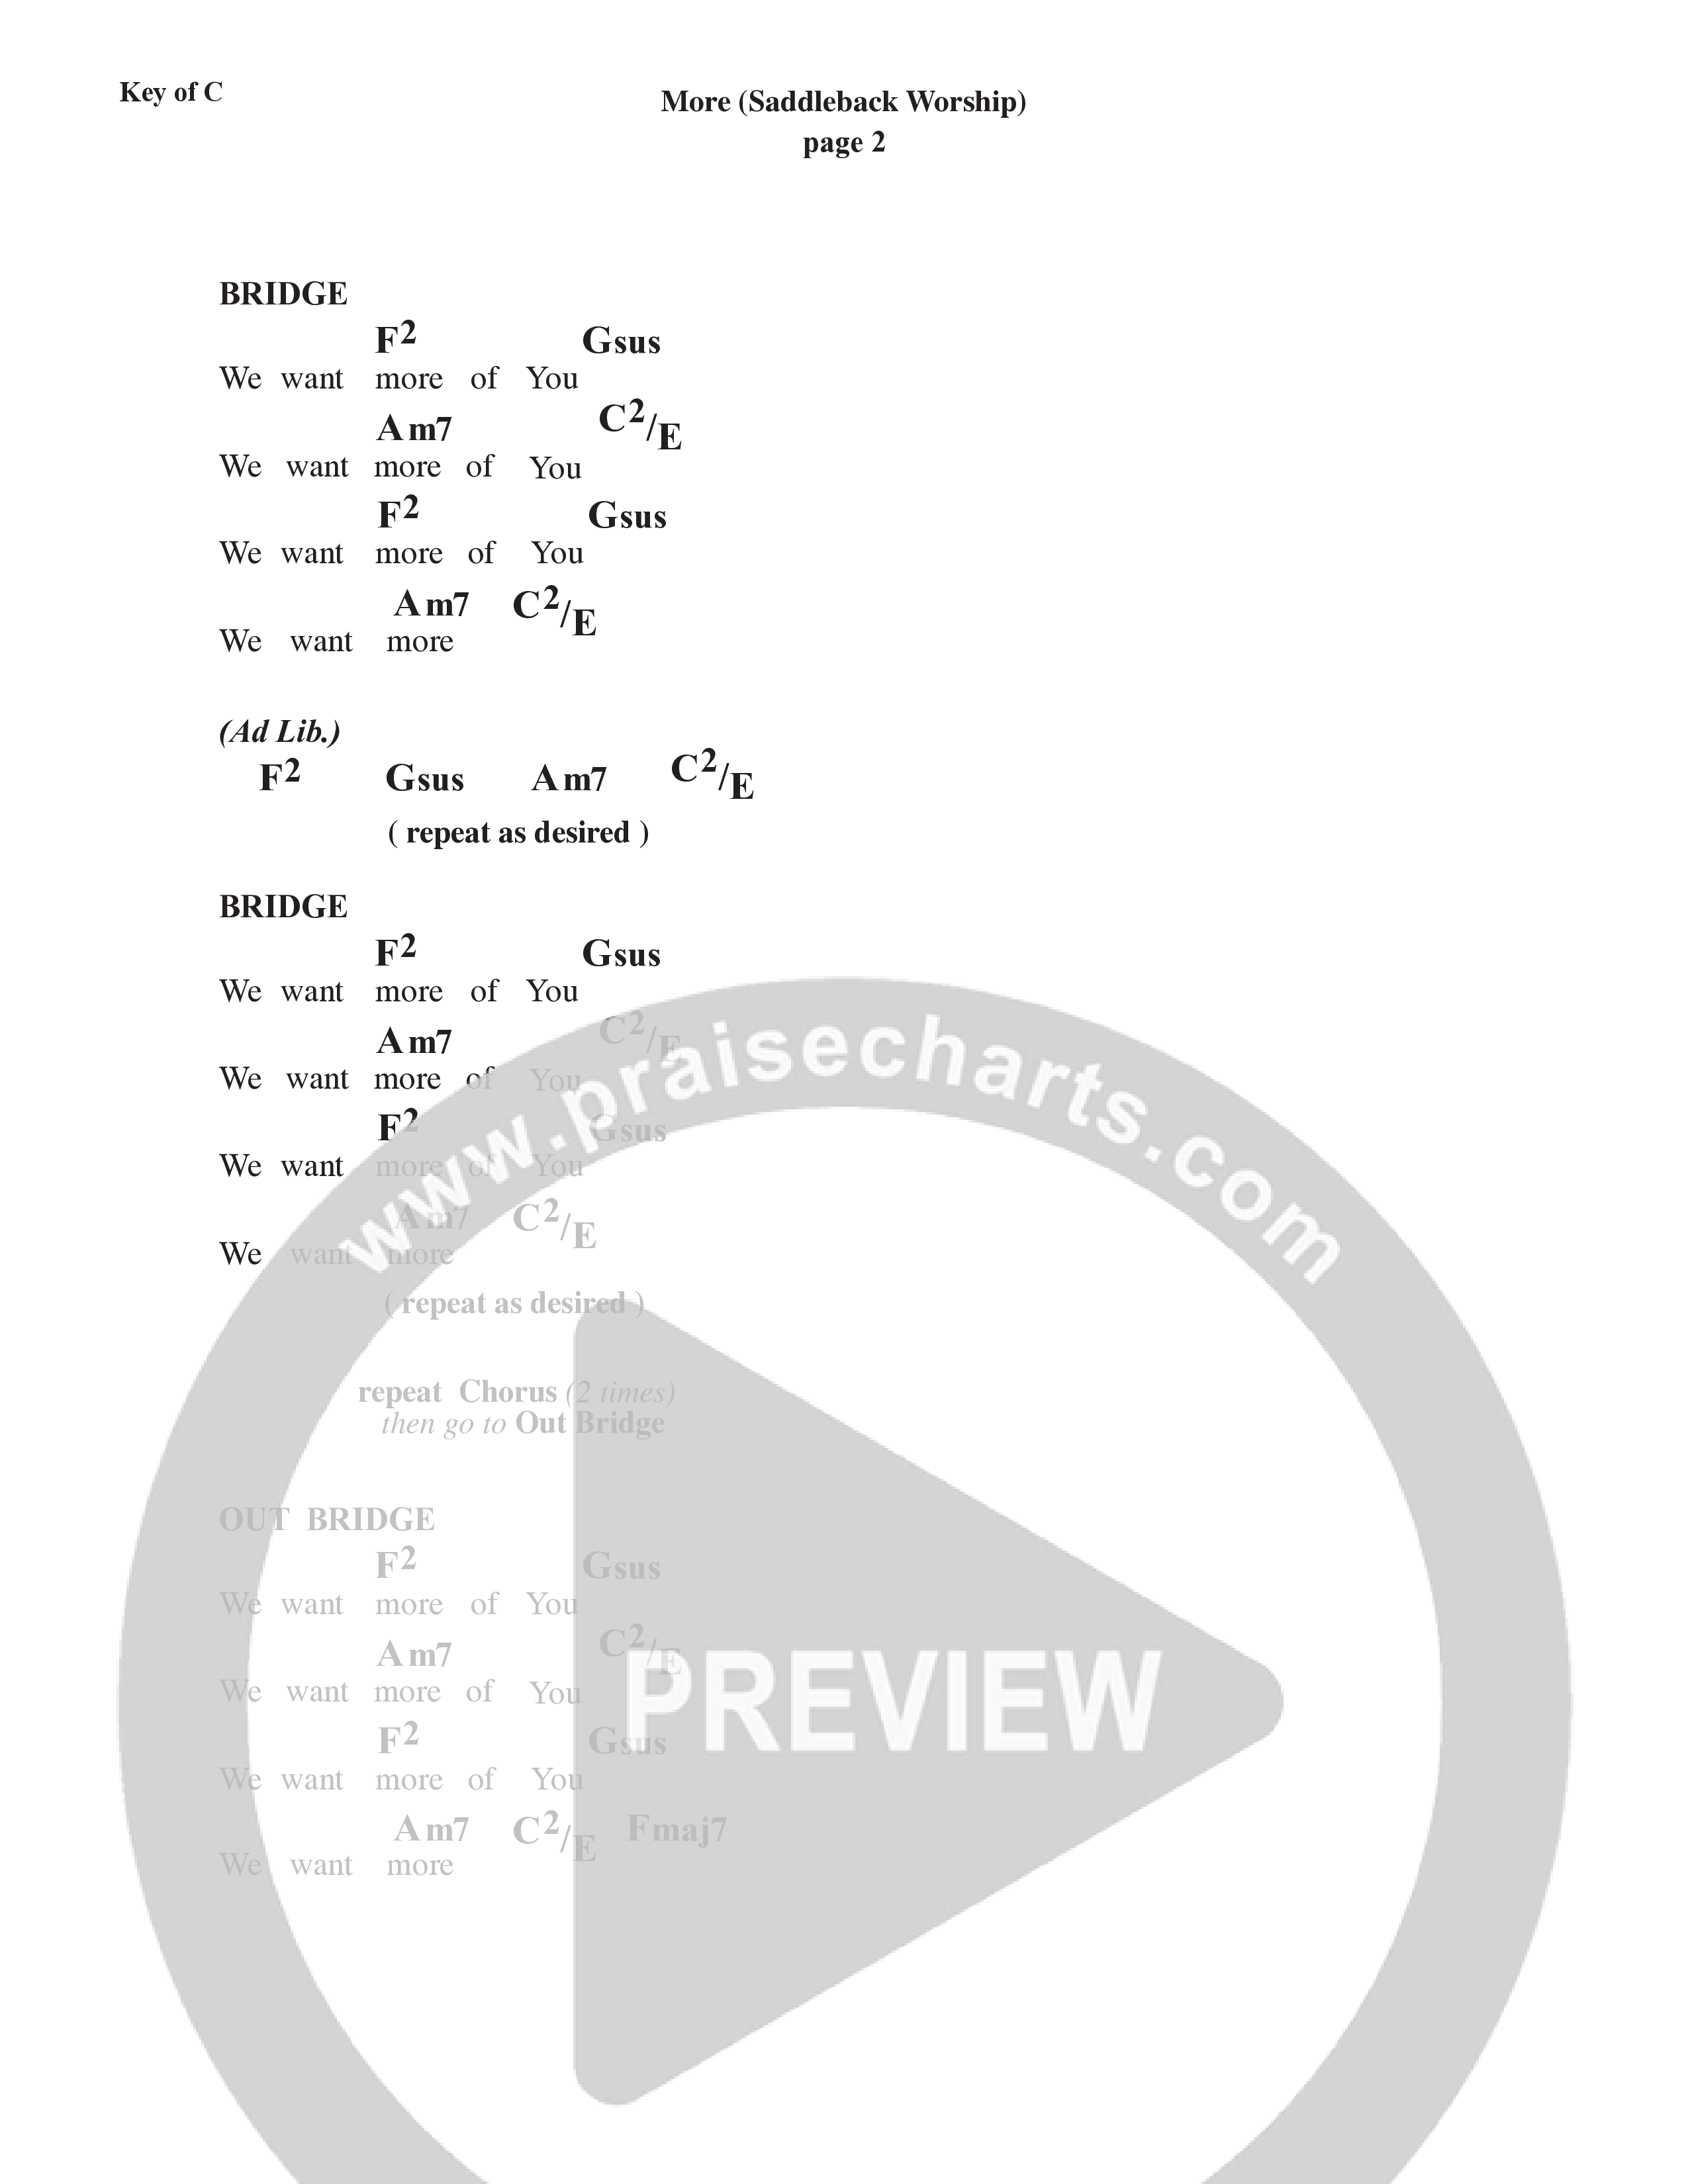 More (Live) Chord Chart (Saddleback Worship)